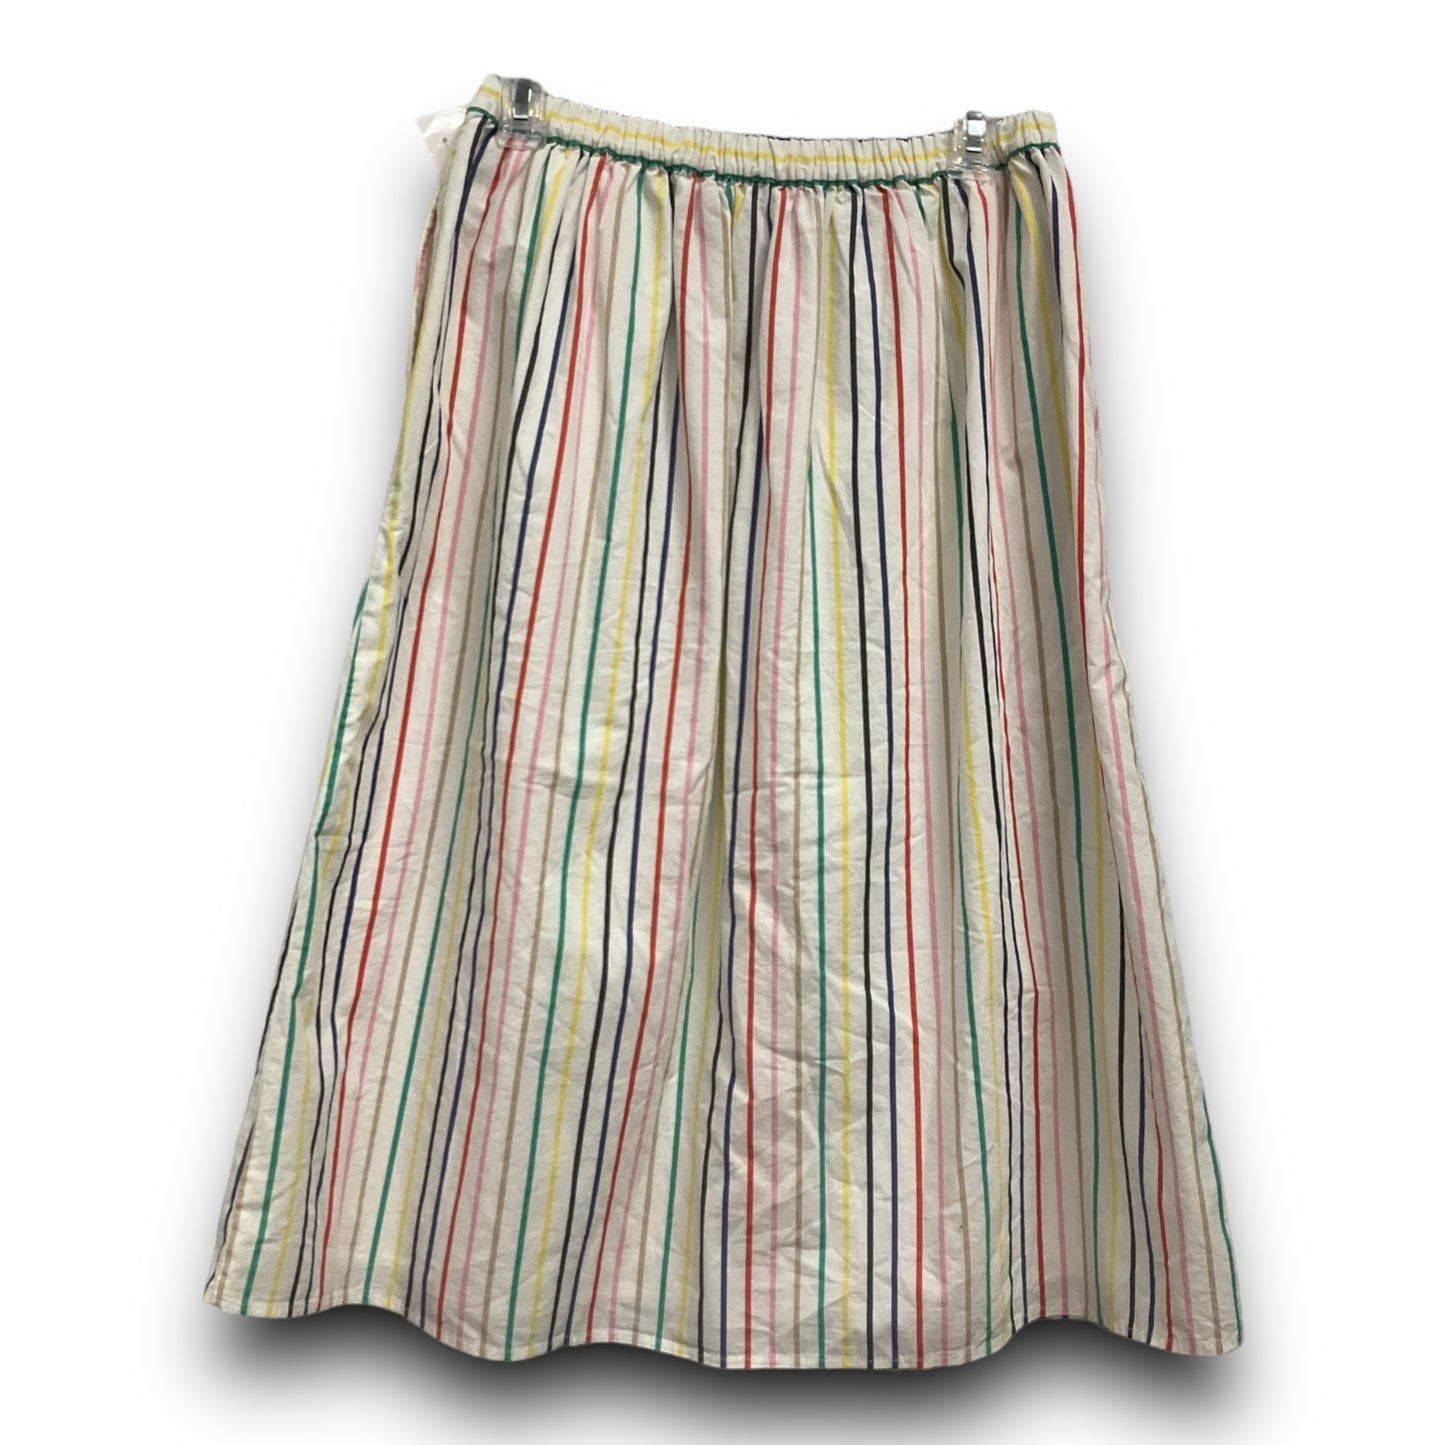 Skirt Midi By J. Crew  Size: S